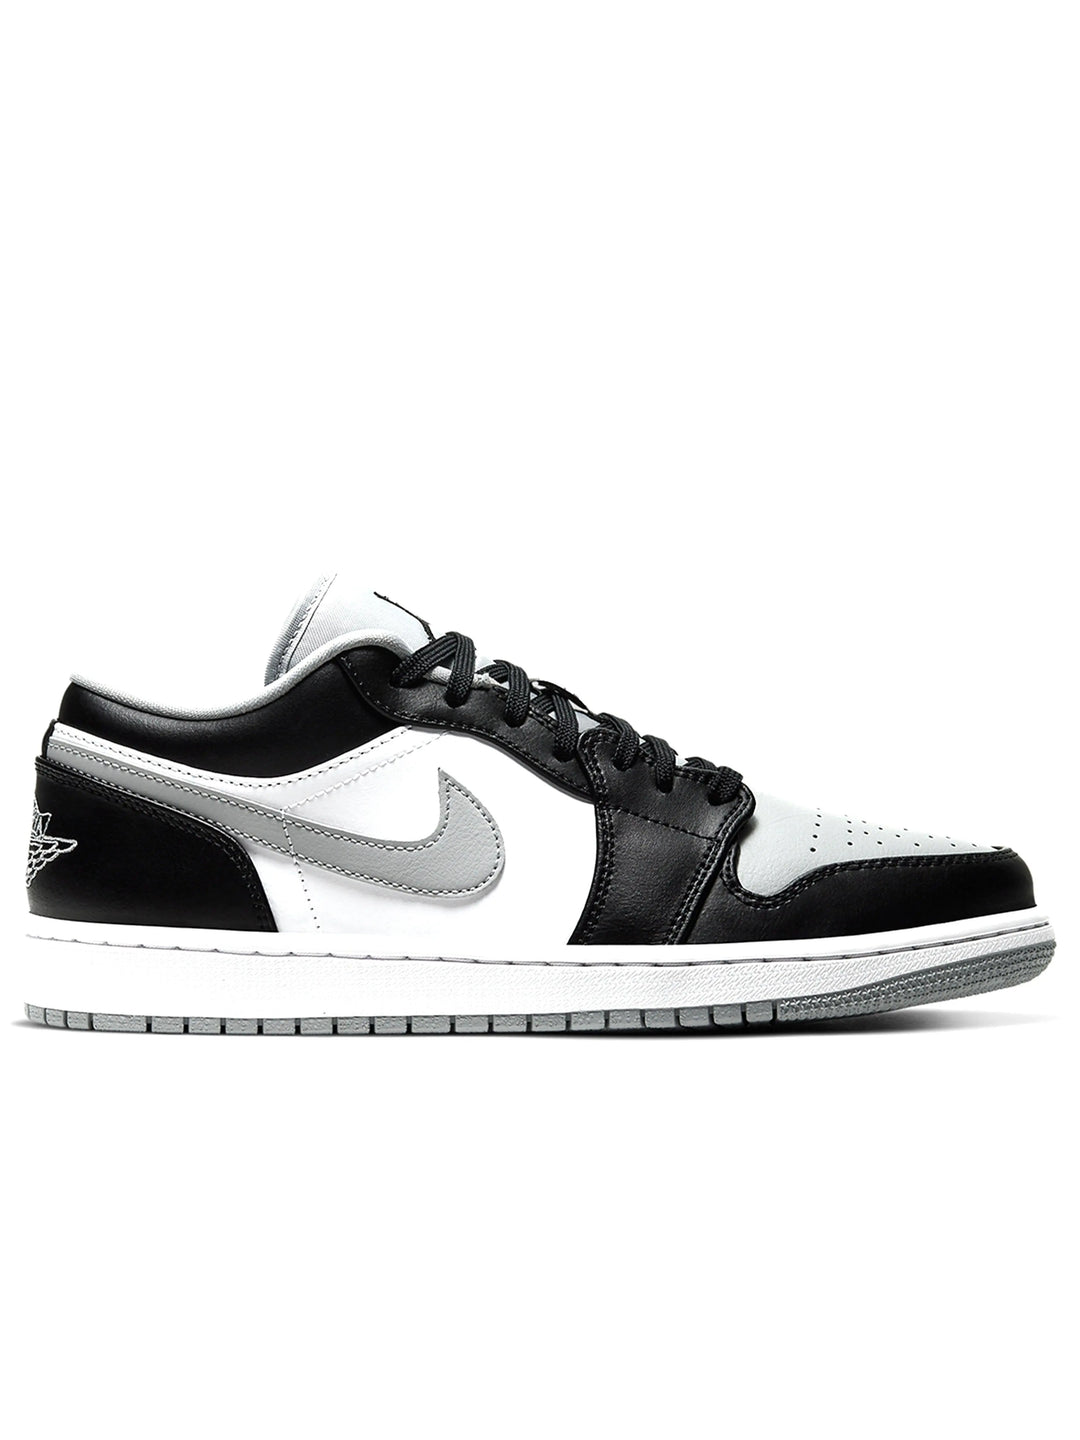 Nike Air Jordan 1 Low Shadow Black/Smoke Grey Prior